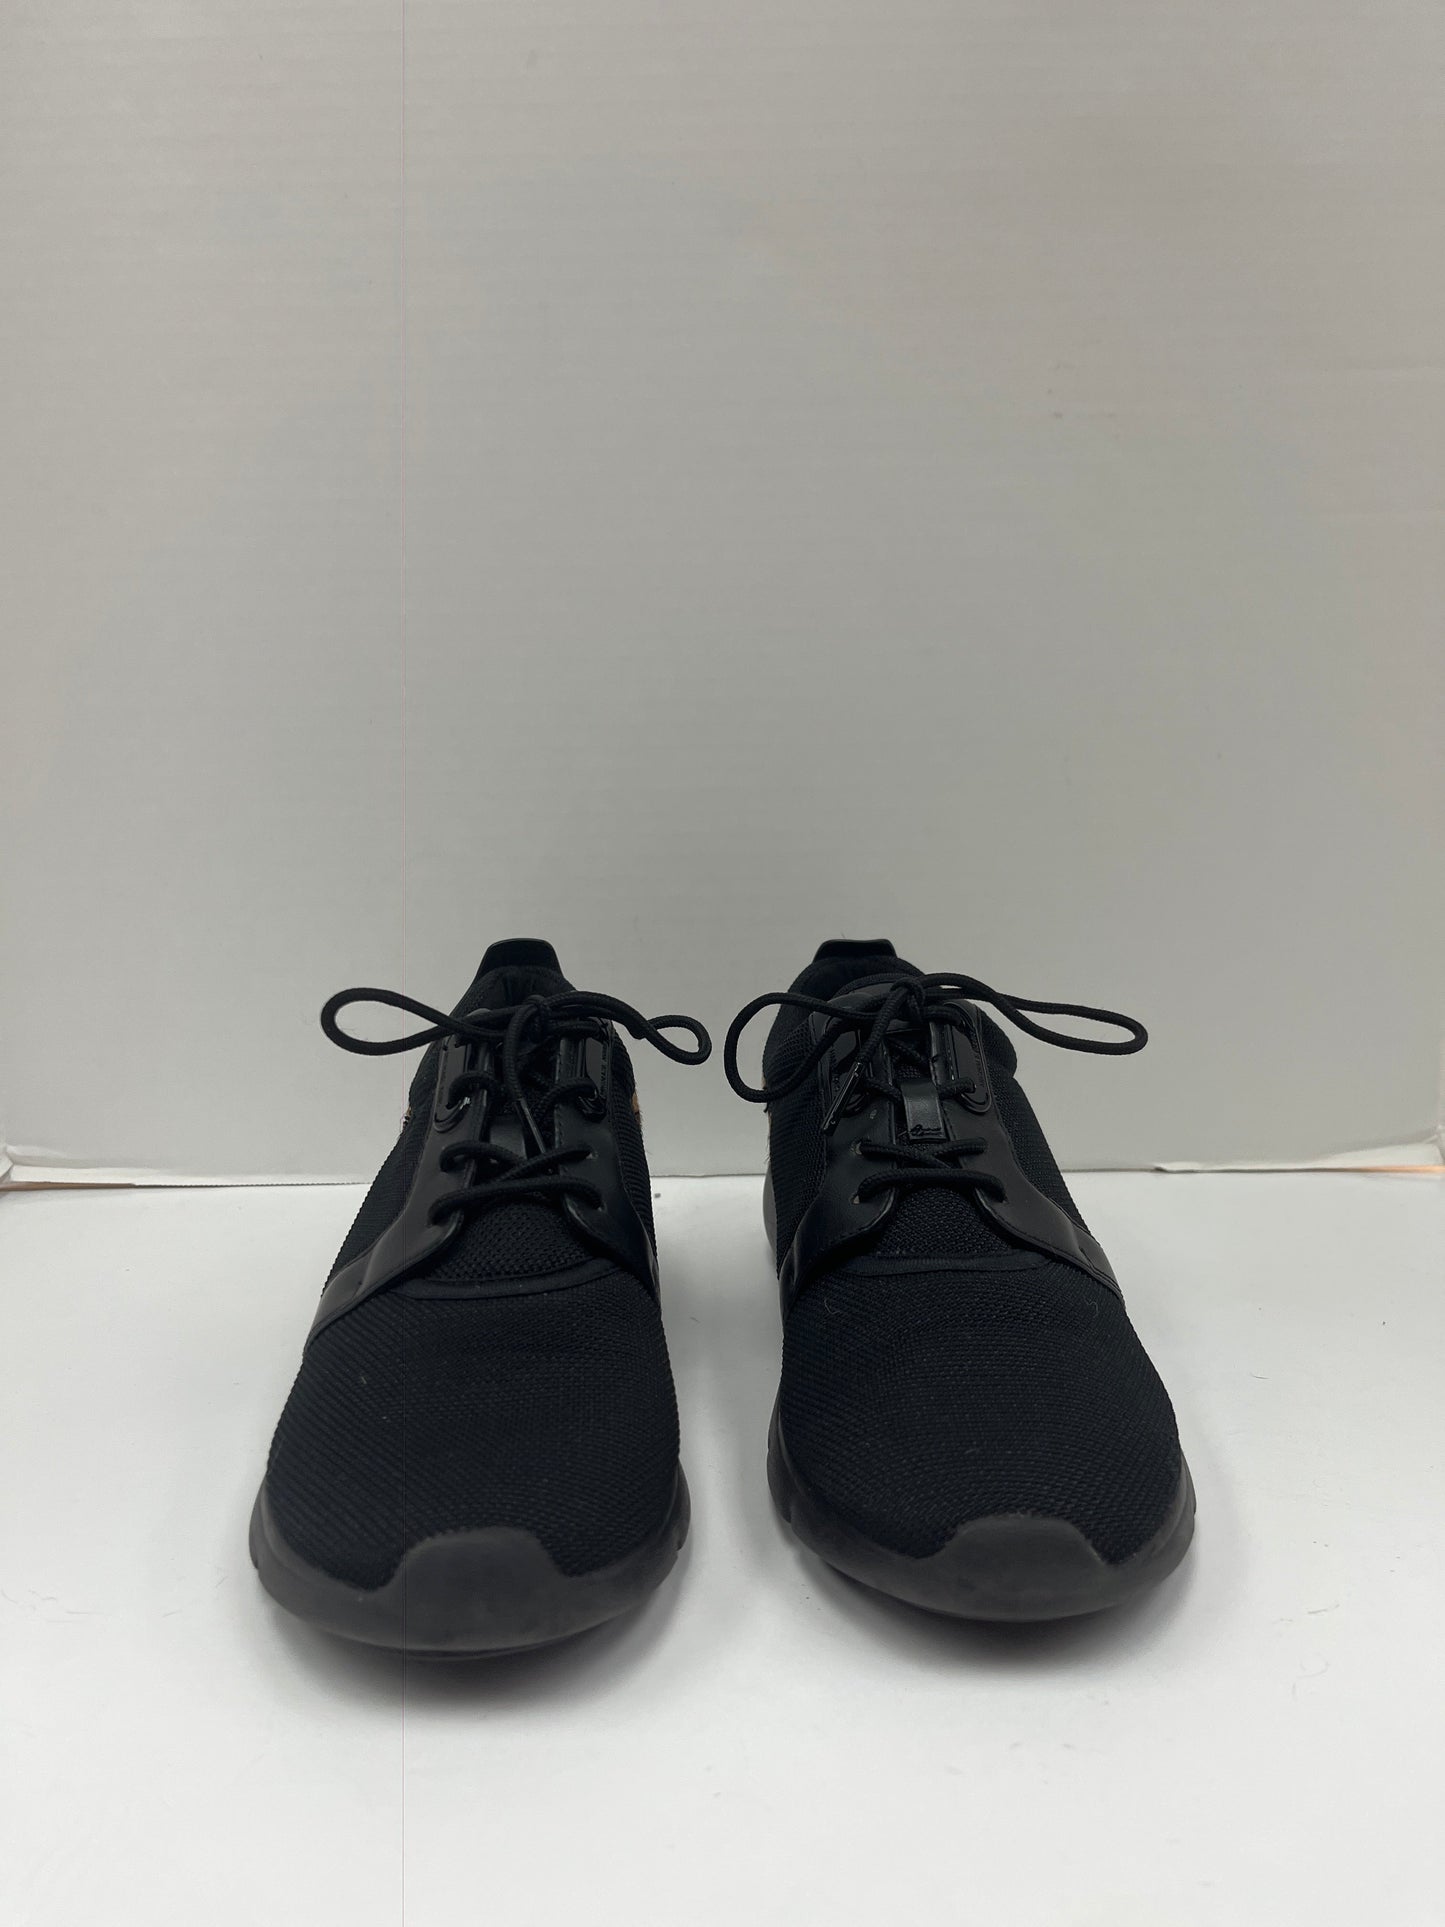 Shoes Designer By Michael Kors  Size: 7.5